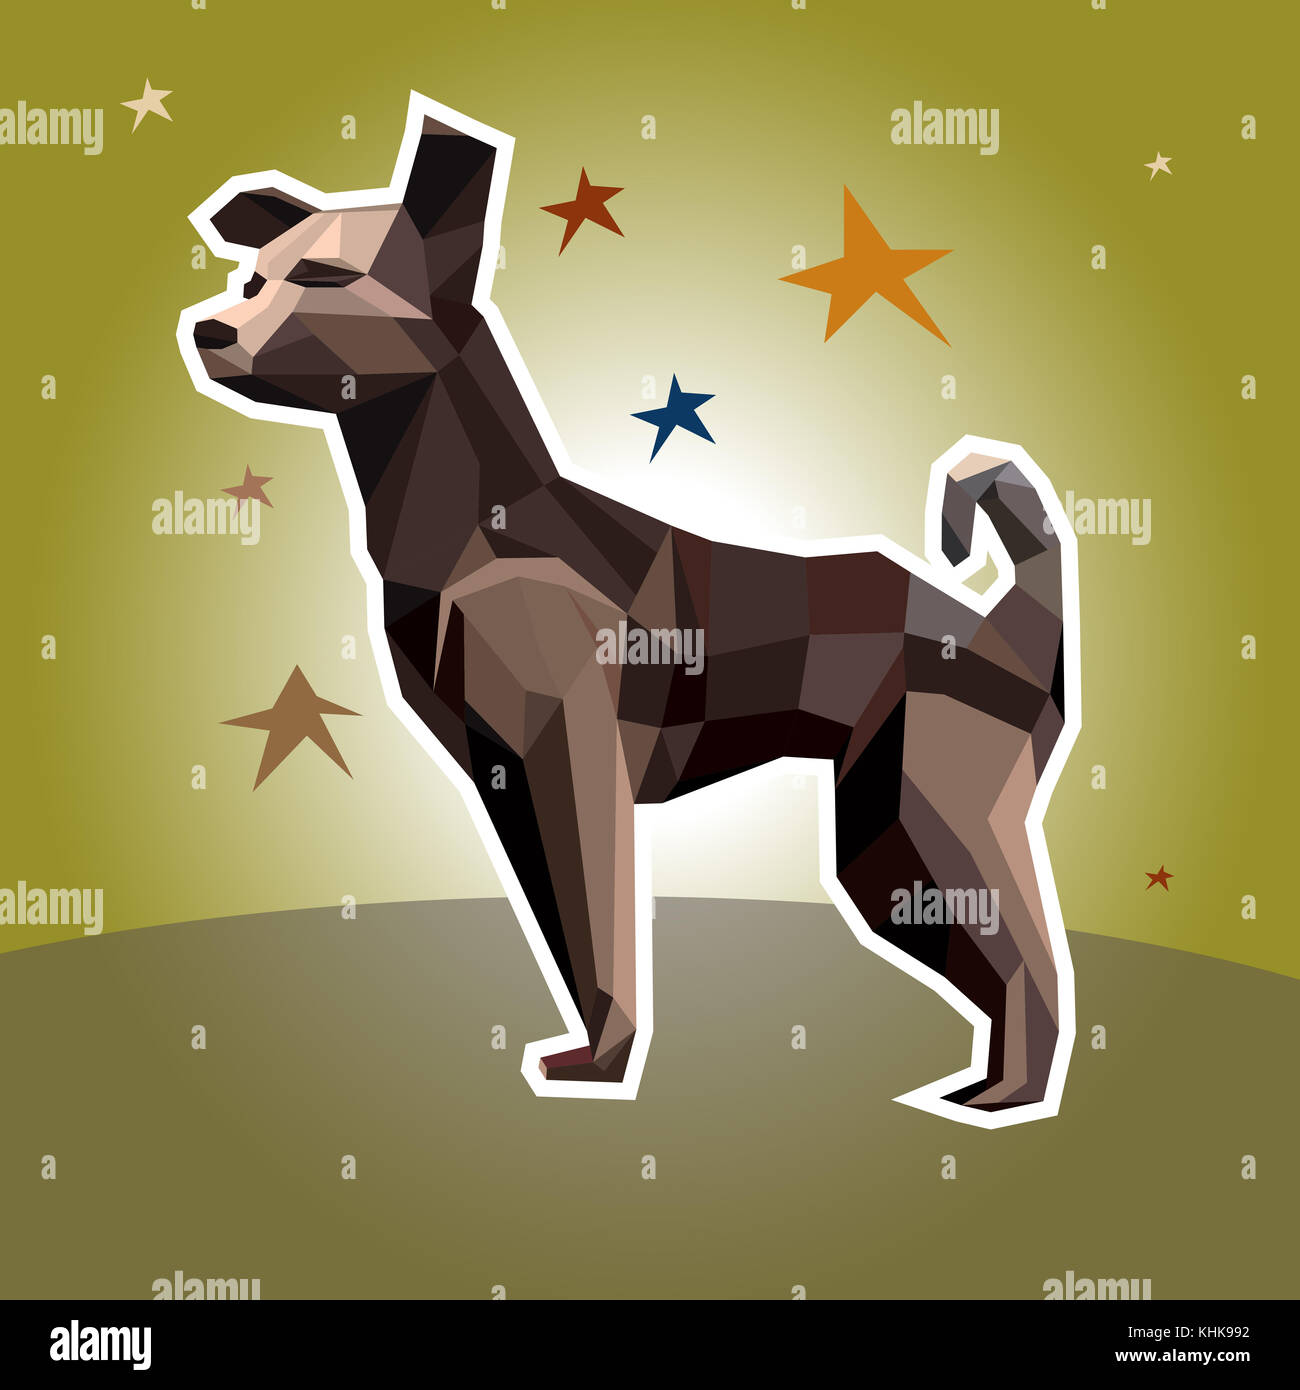 Illustration vector dog in polygonal style Stock Photo